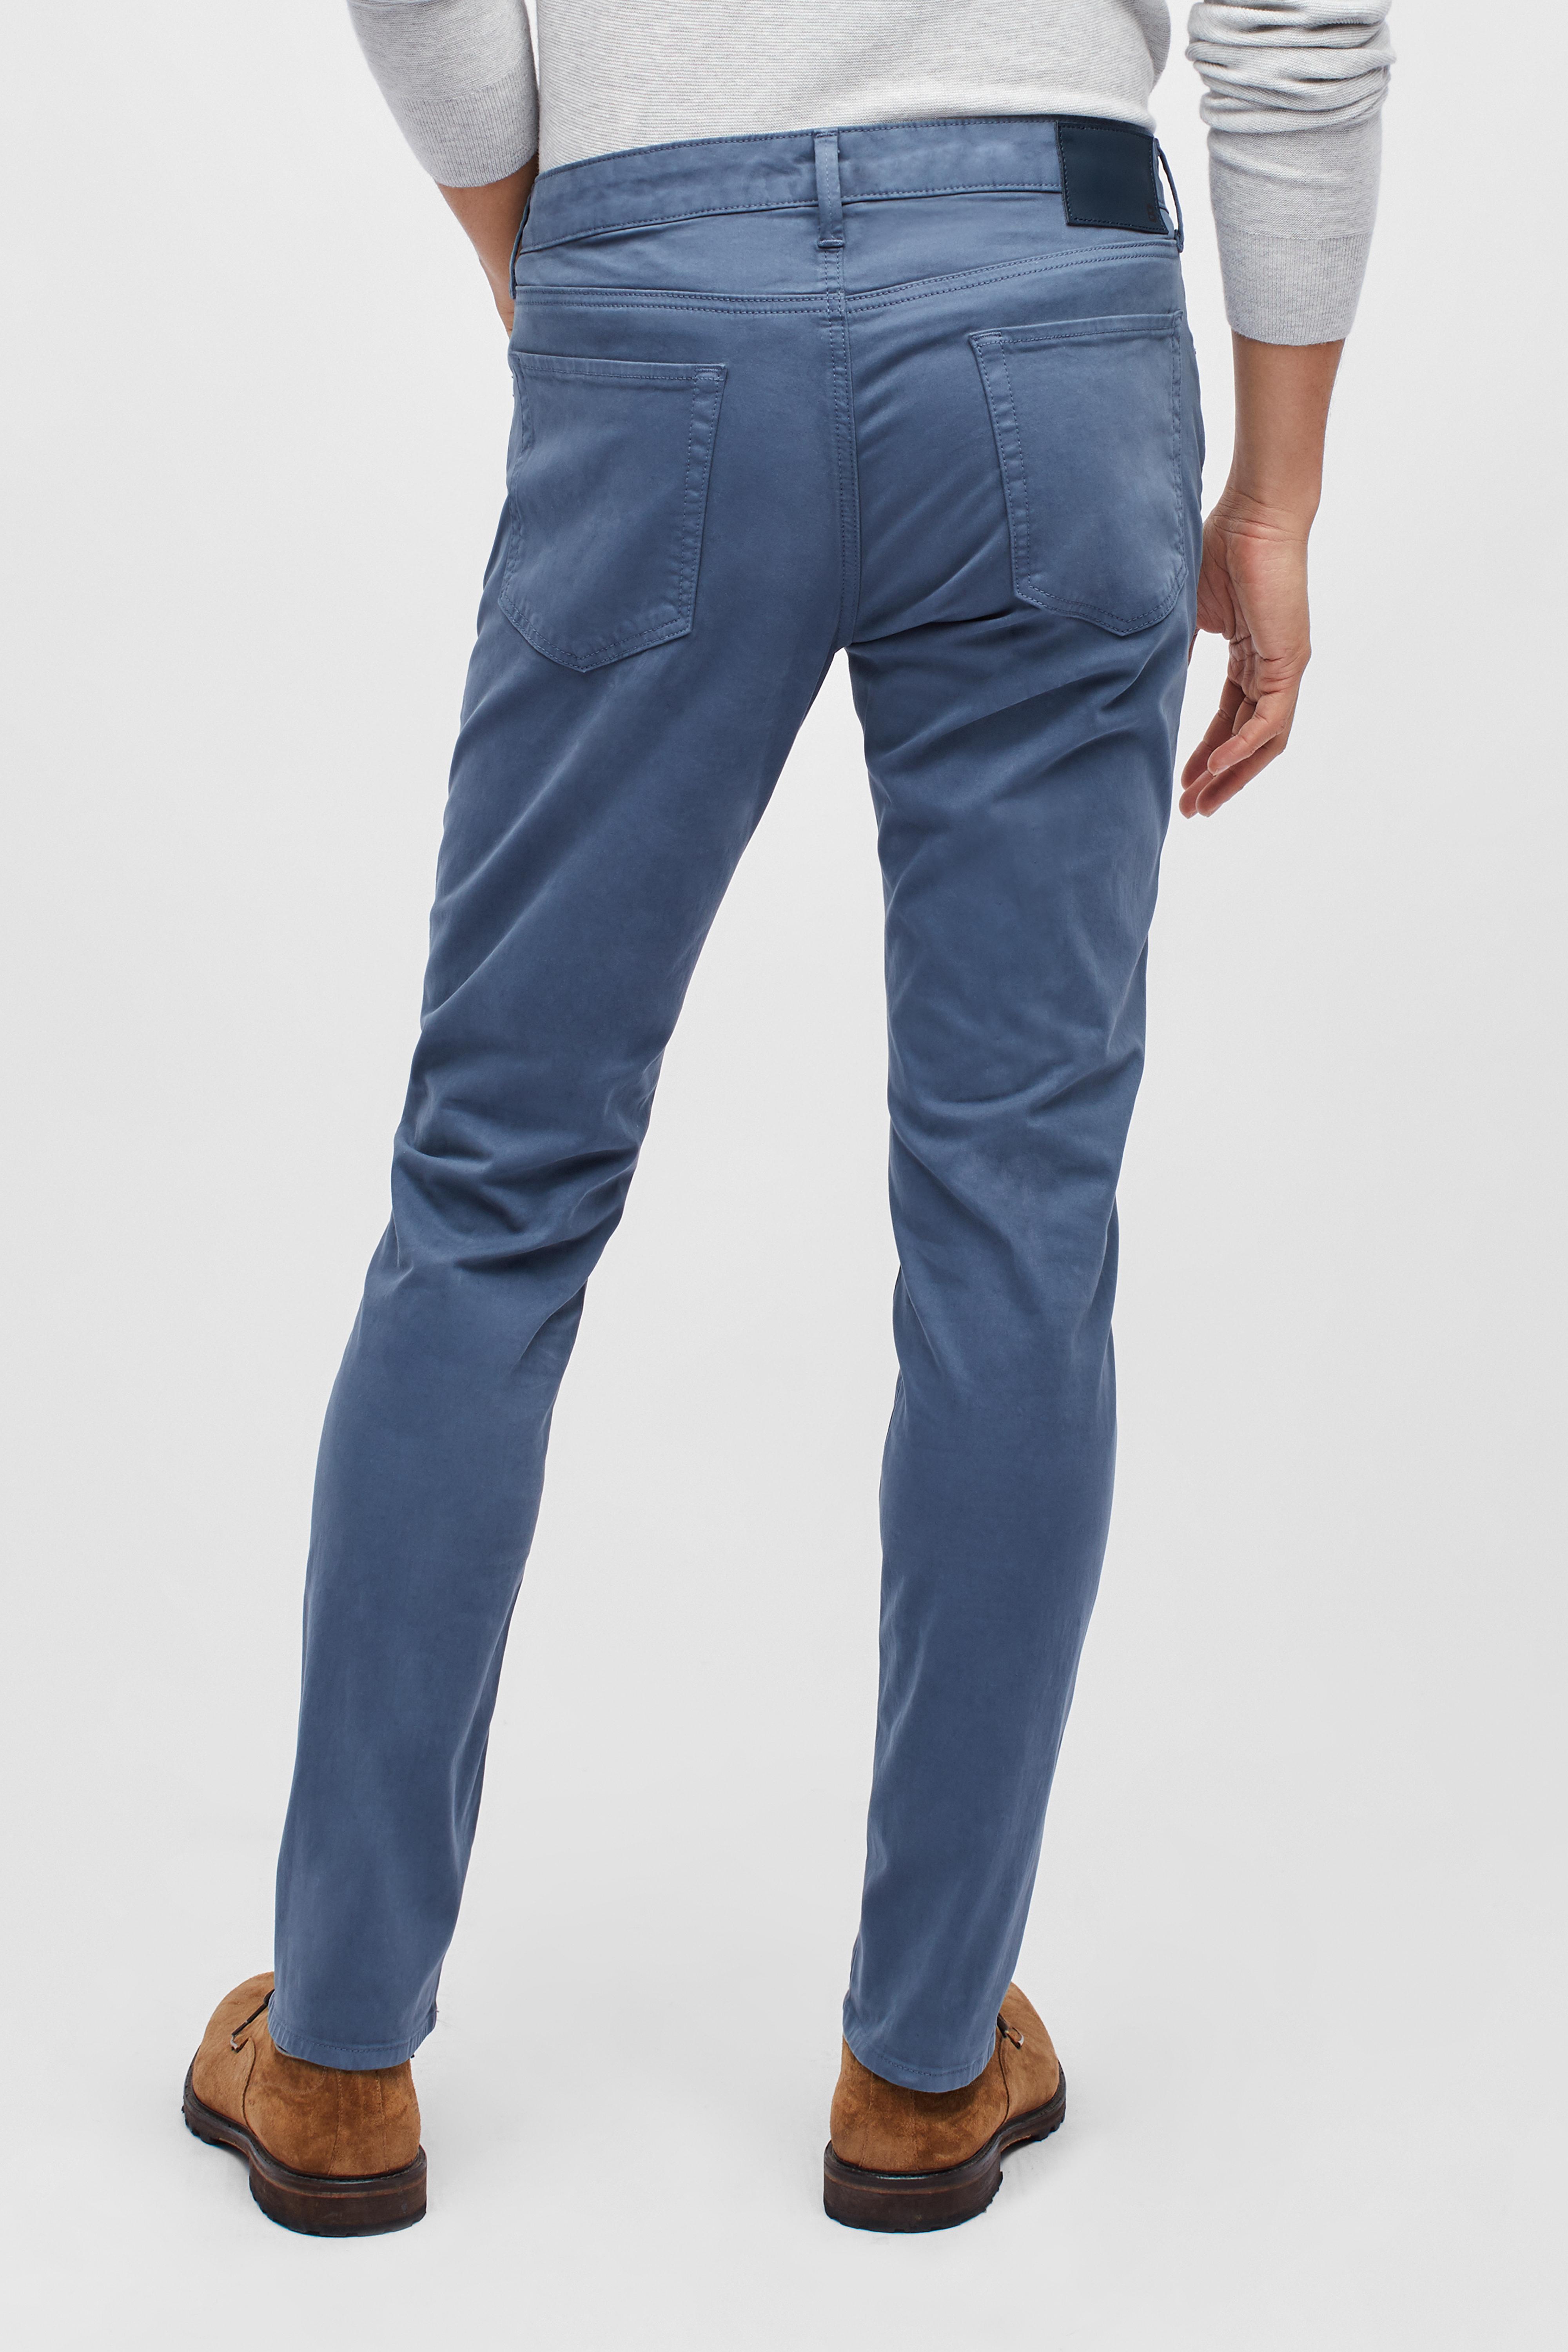 Bonobos Cotton Italian Soft 5-pocket Pants in Midnight (Blue) for Men ...